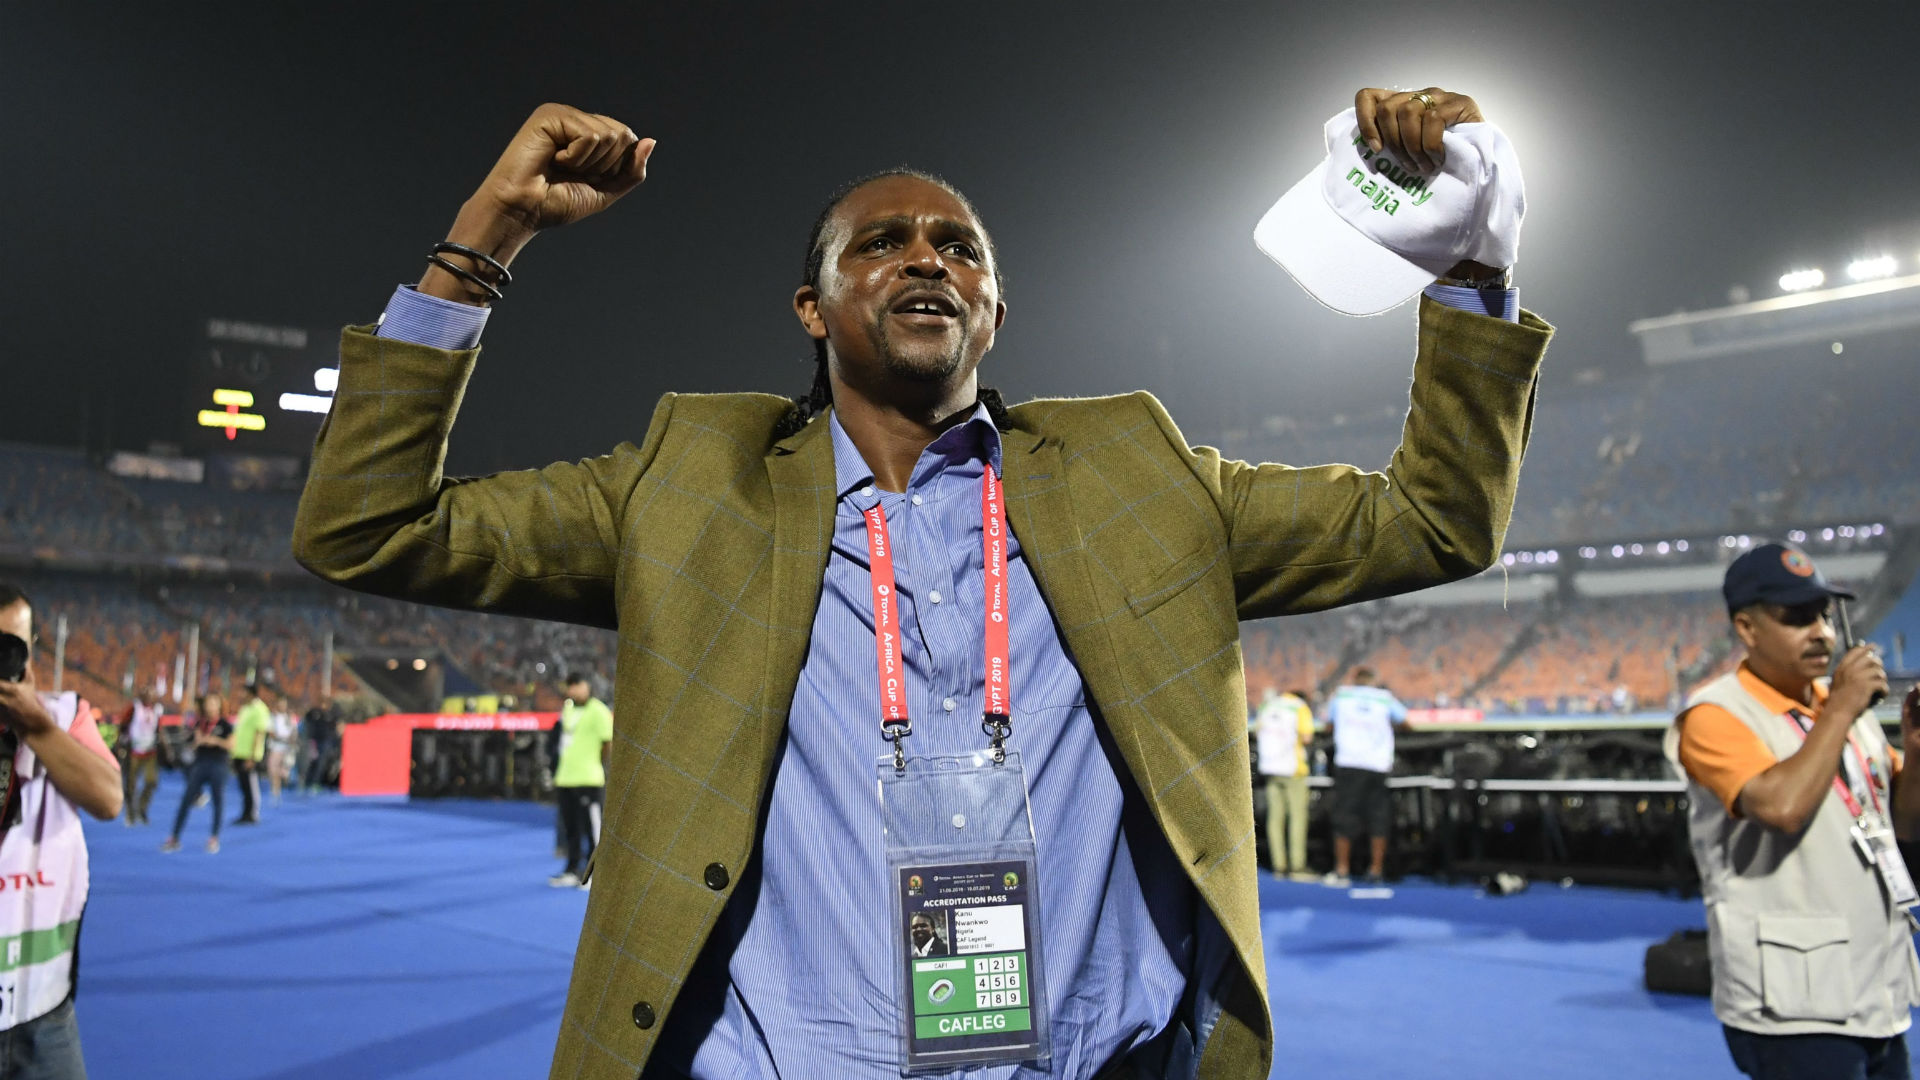 Afcon 2019: Kanu and Agali make surprise visit to Nigeria training